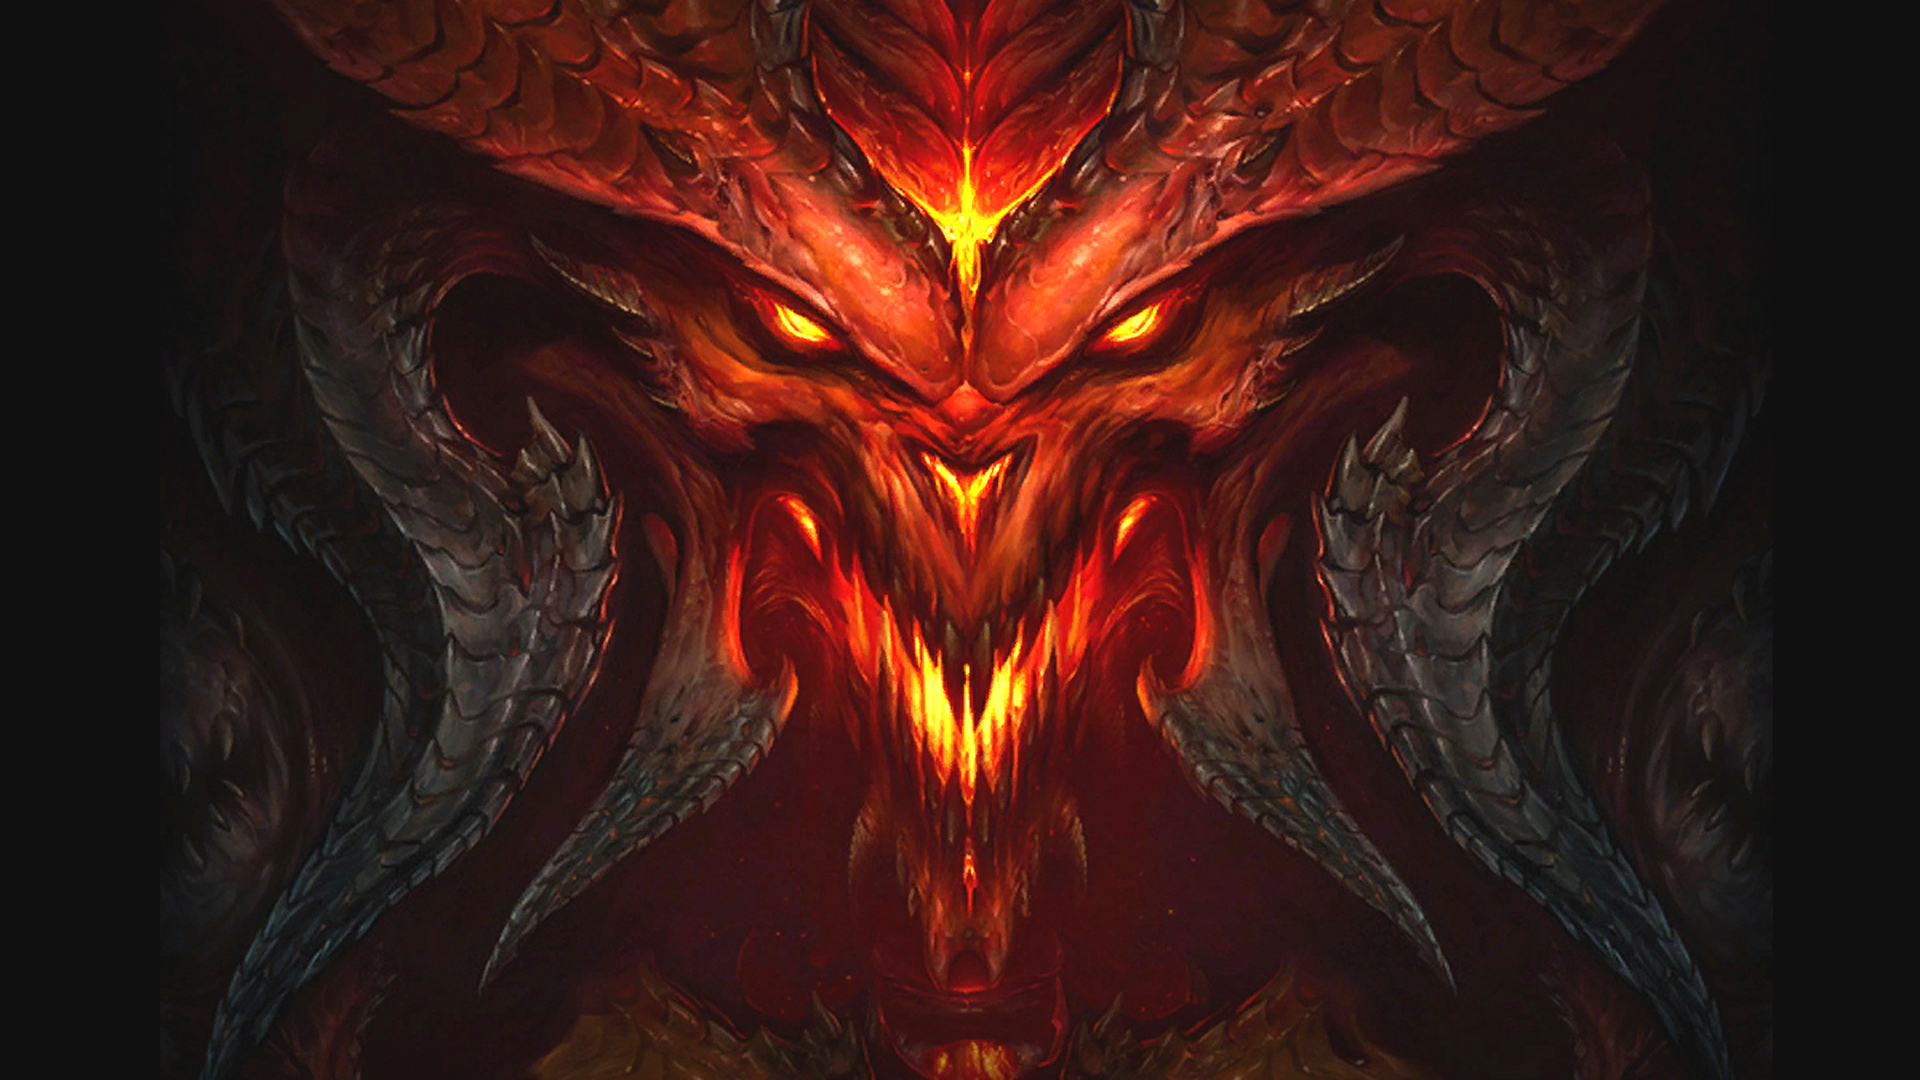 Diablo III Patch 2.0.6 Patch Notes and Hotfixes - Diablo III News